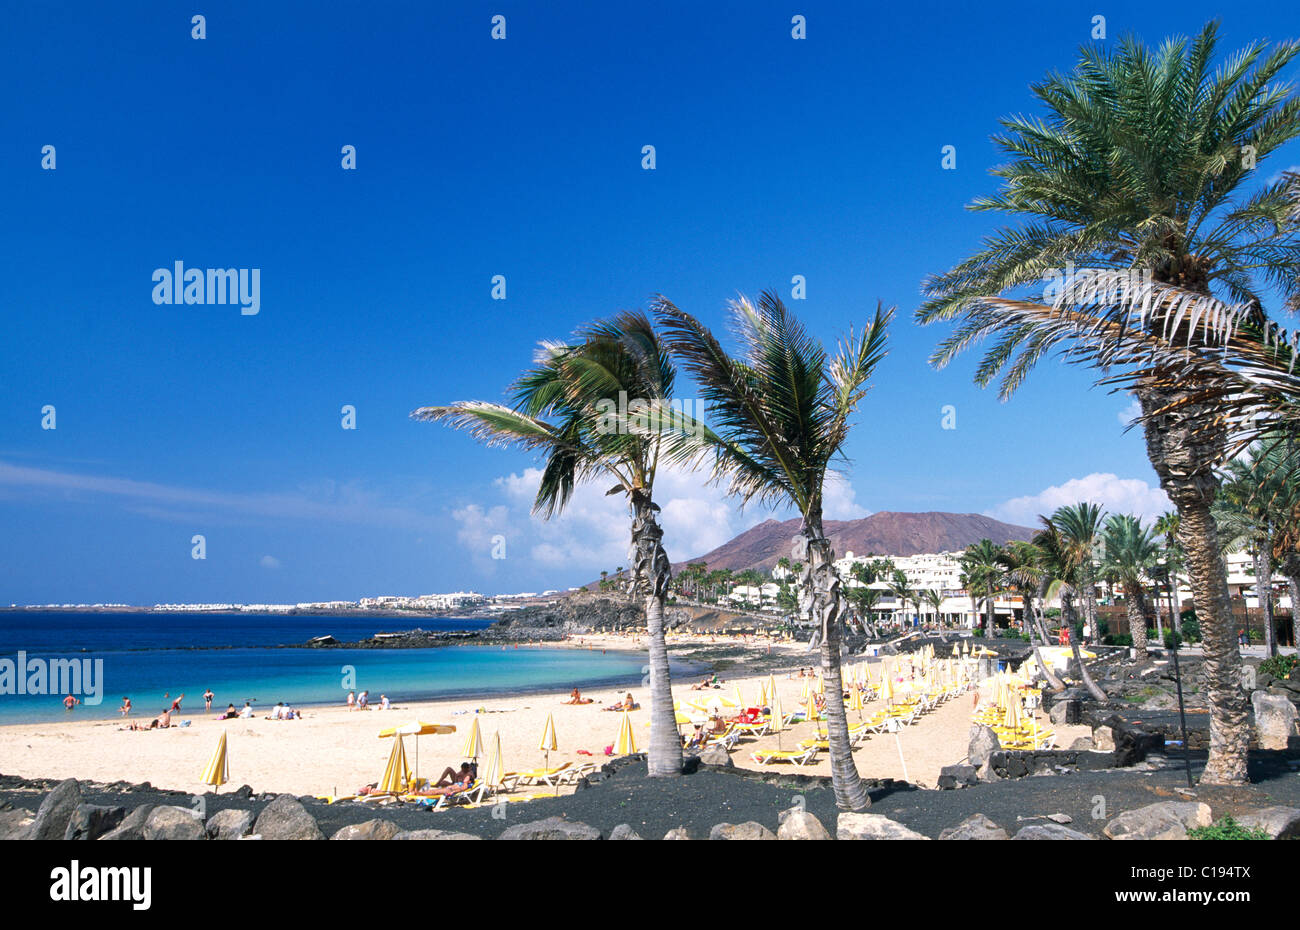 Playa Flamingo, Lanzarote, Canary Islands, Spain, Europe Banque D'Images